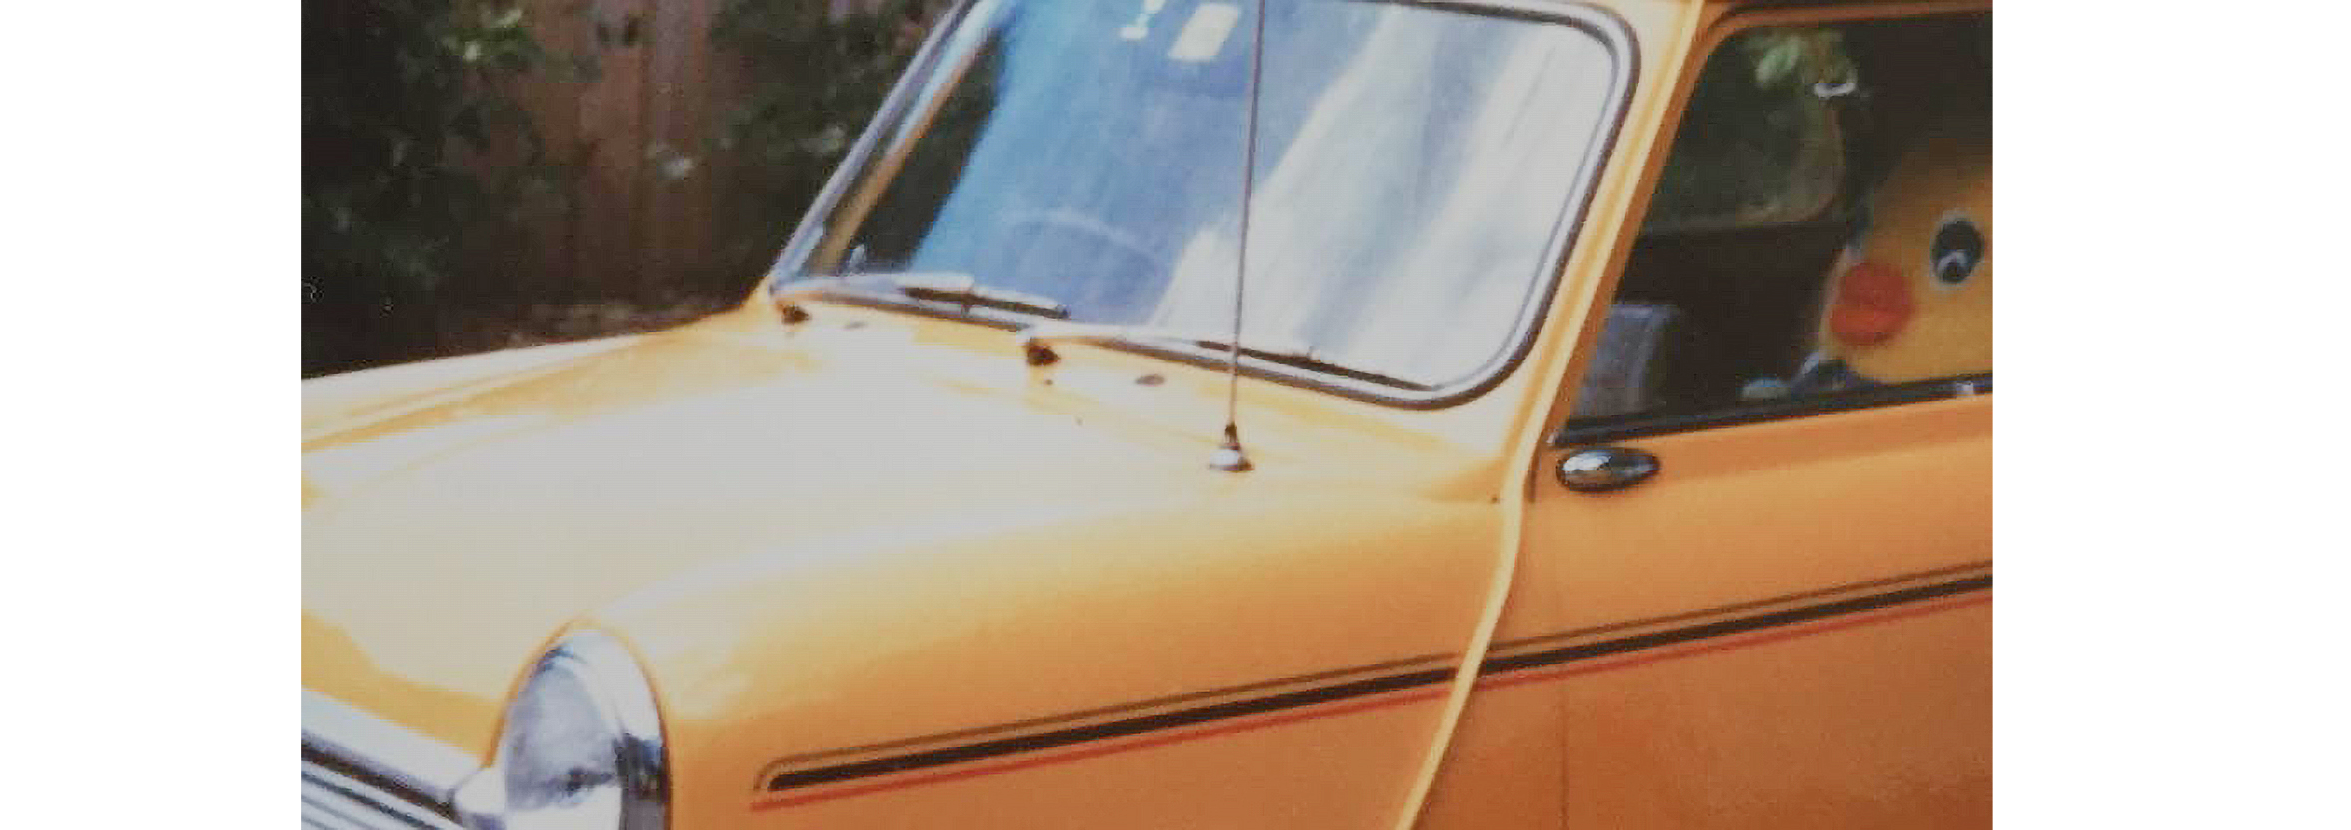 A retro photo close up on a yellow car.